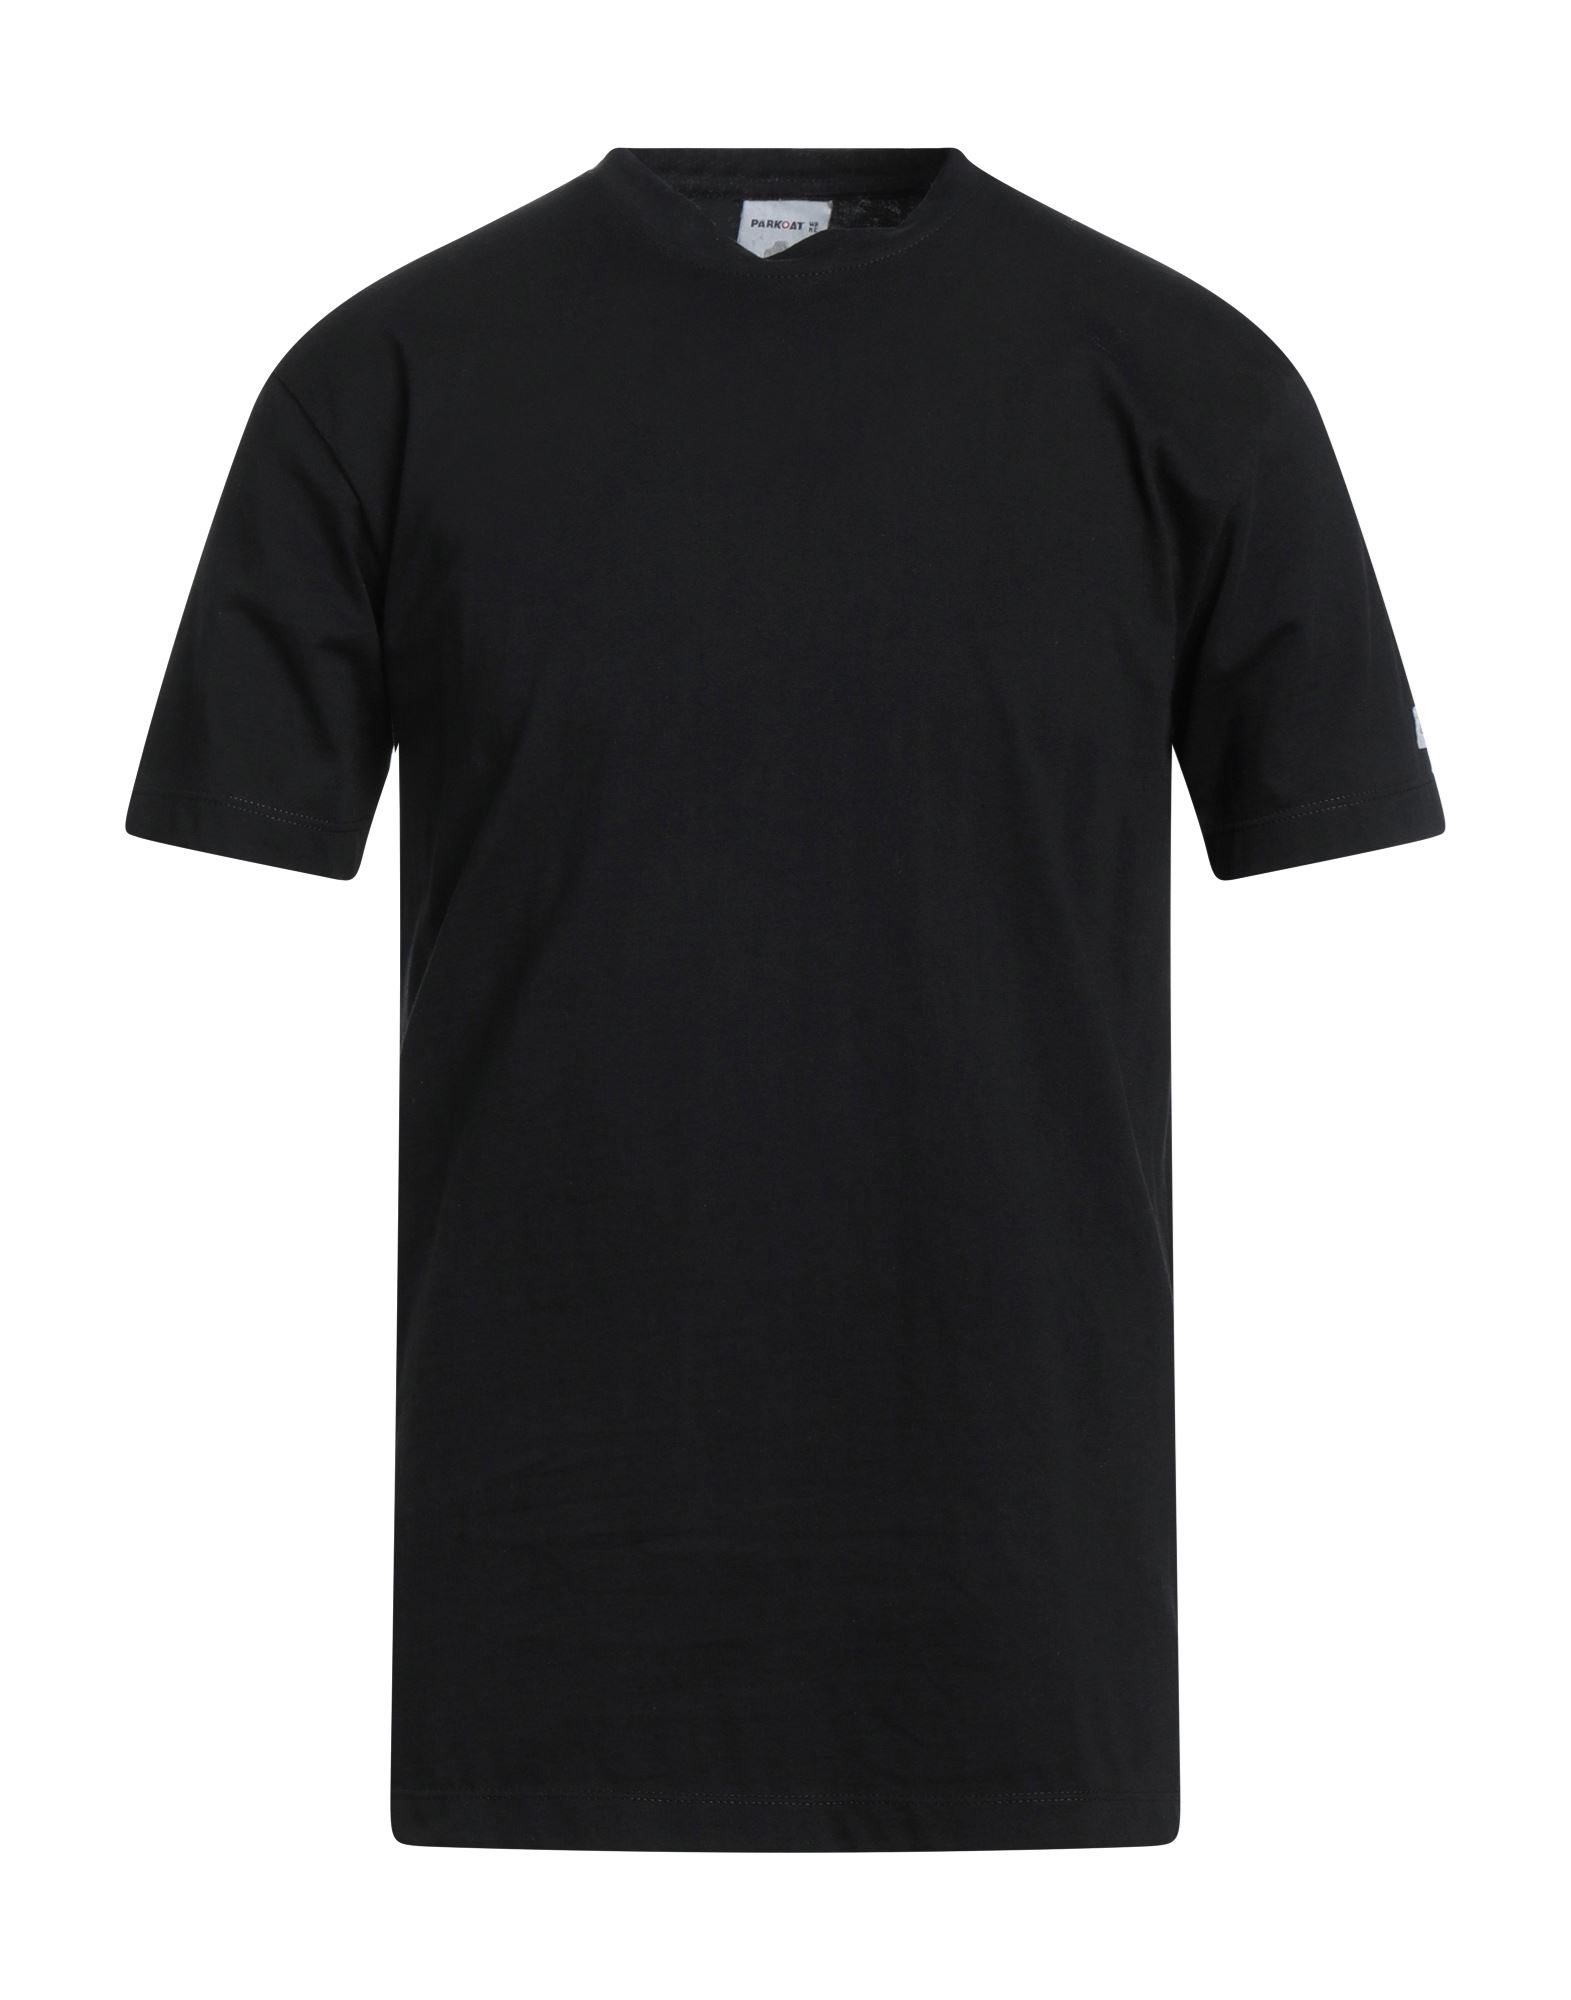 Parkoat T-shirts In Black